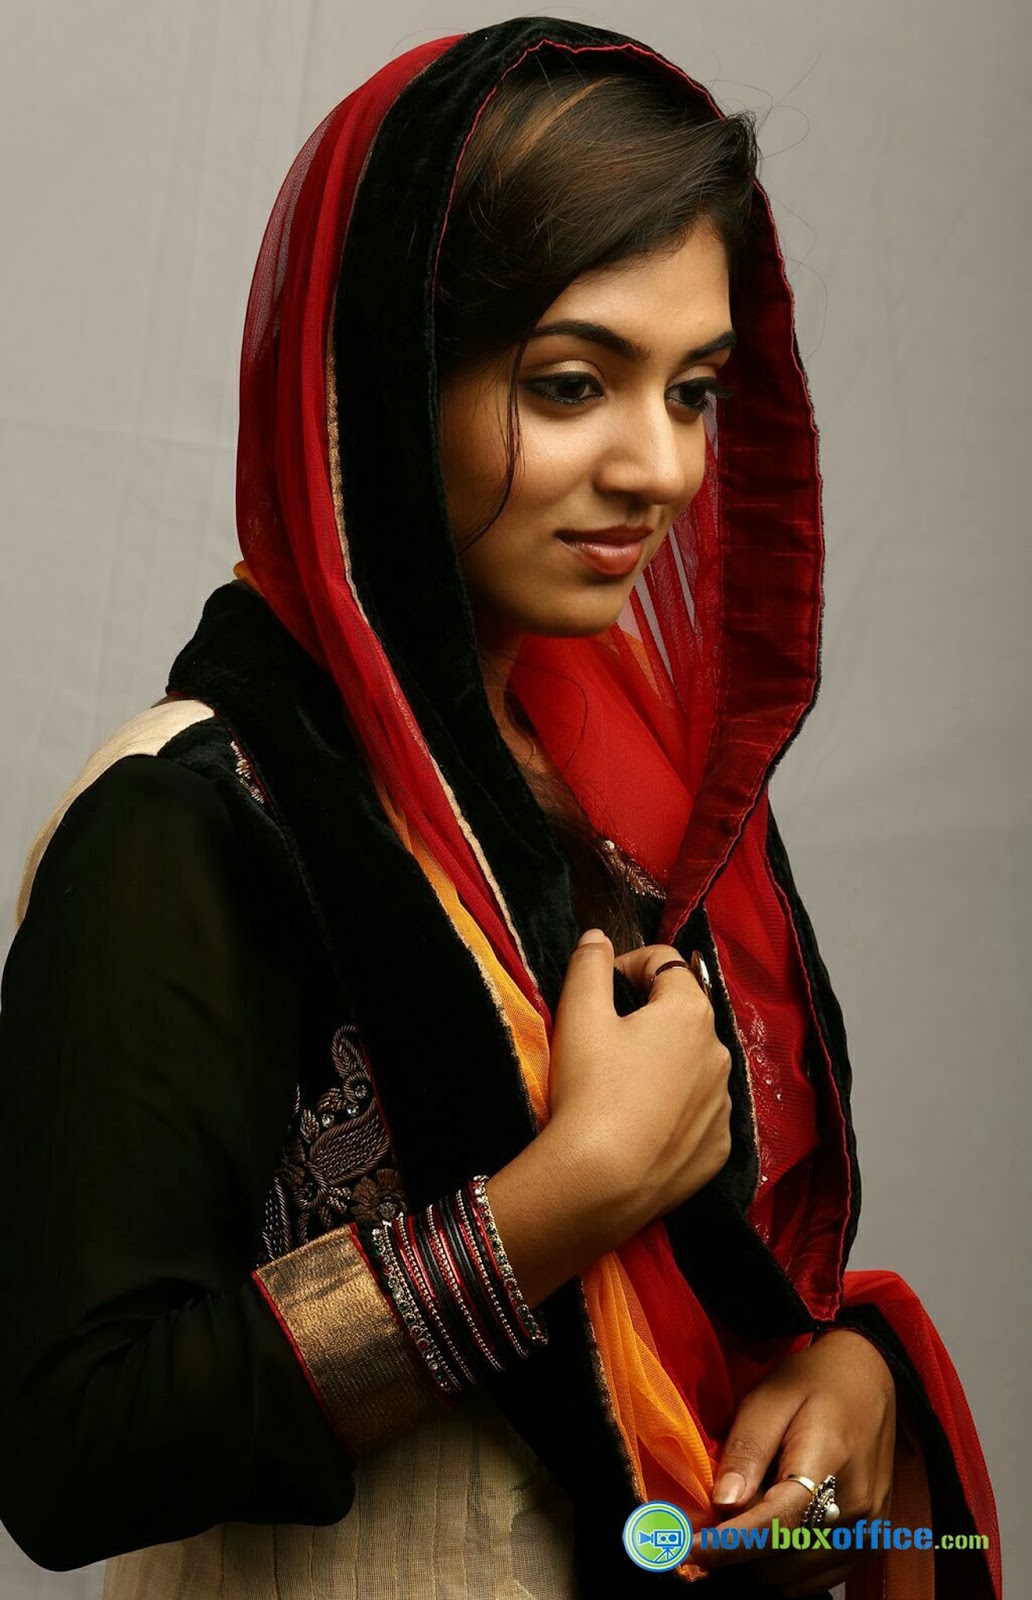 Nazriya Nazim HD Pictures Free | TV Biography
